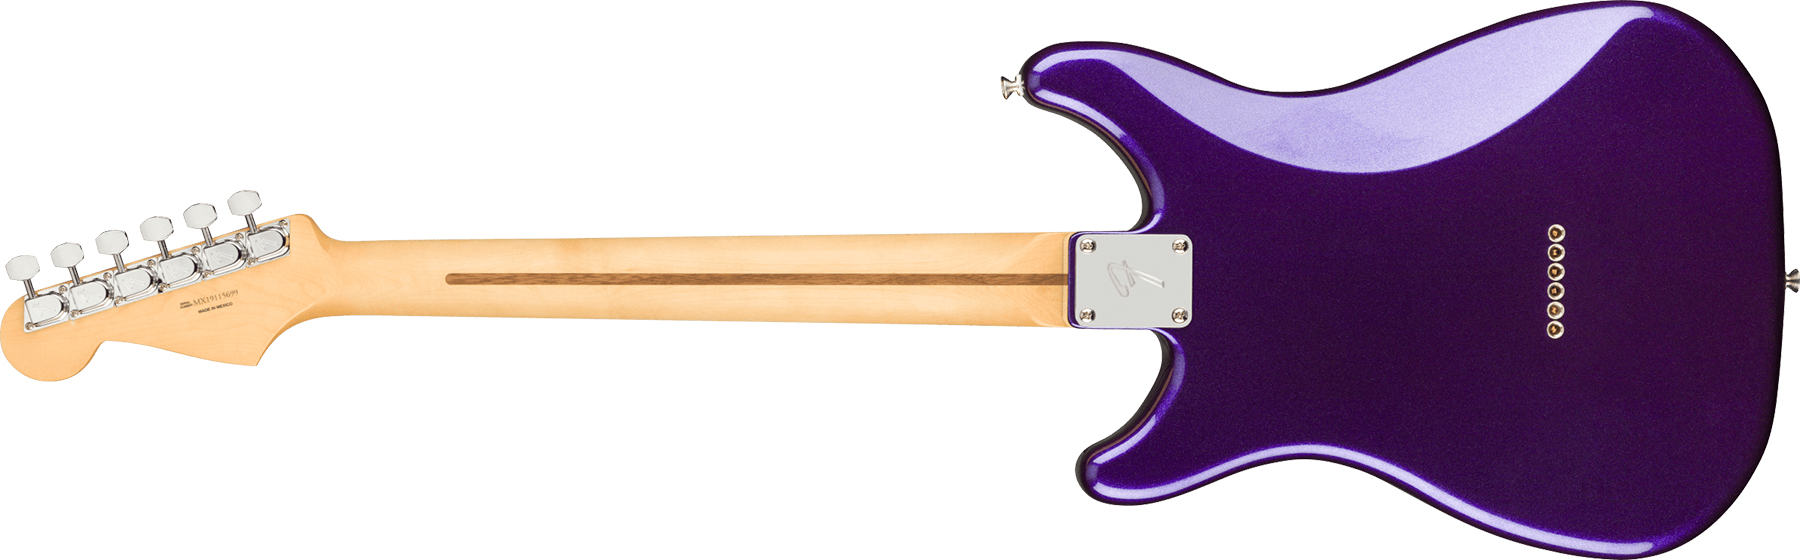 Fender Lead Iii Player Mex Hh Ht Pf - Metallic Purple - Str shape electric guitar - Variation 1